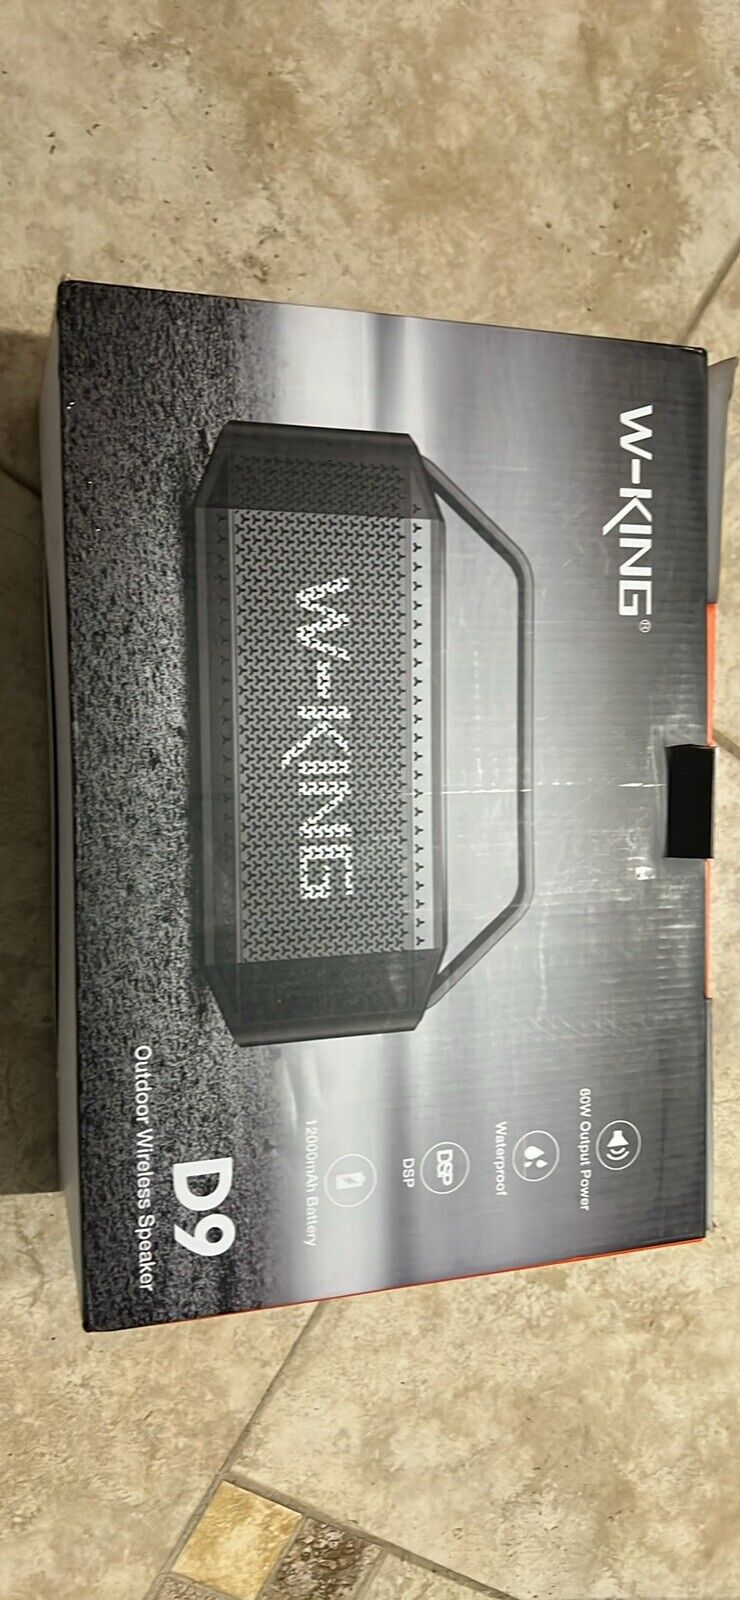 W-KING Portable Loud Speakers Subwoofer 60W(80W Peak) Waterproof D9-1 - BLACK